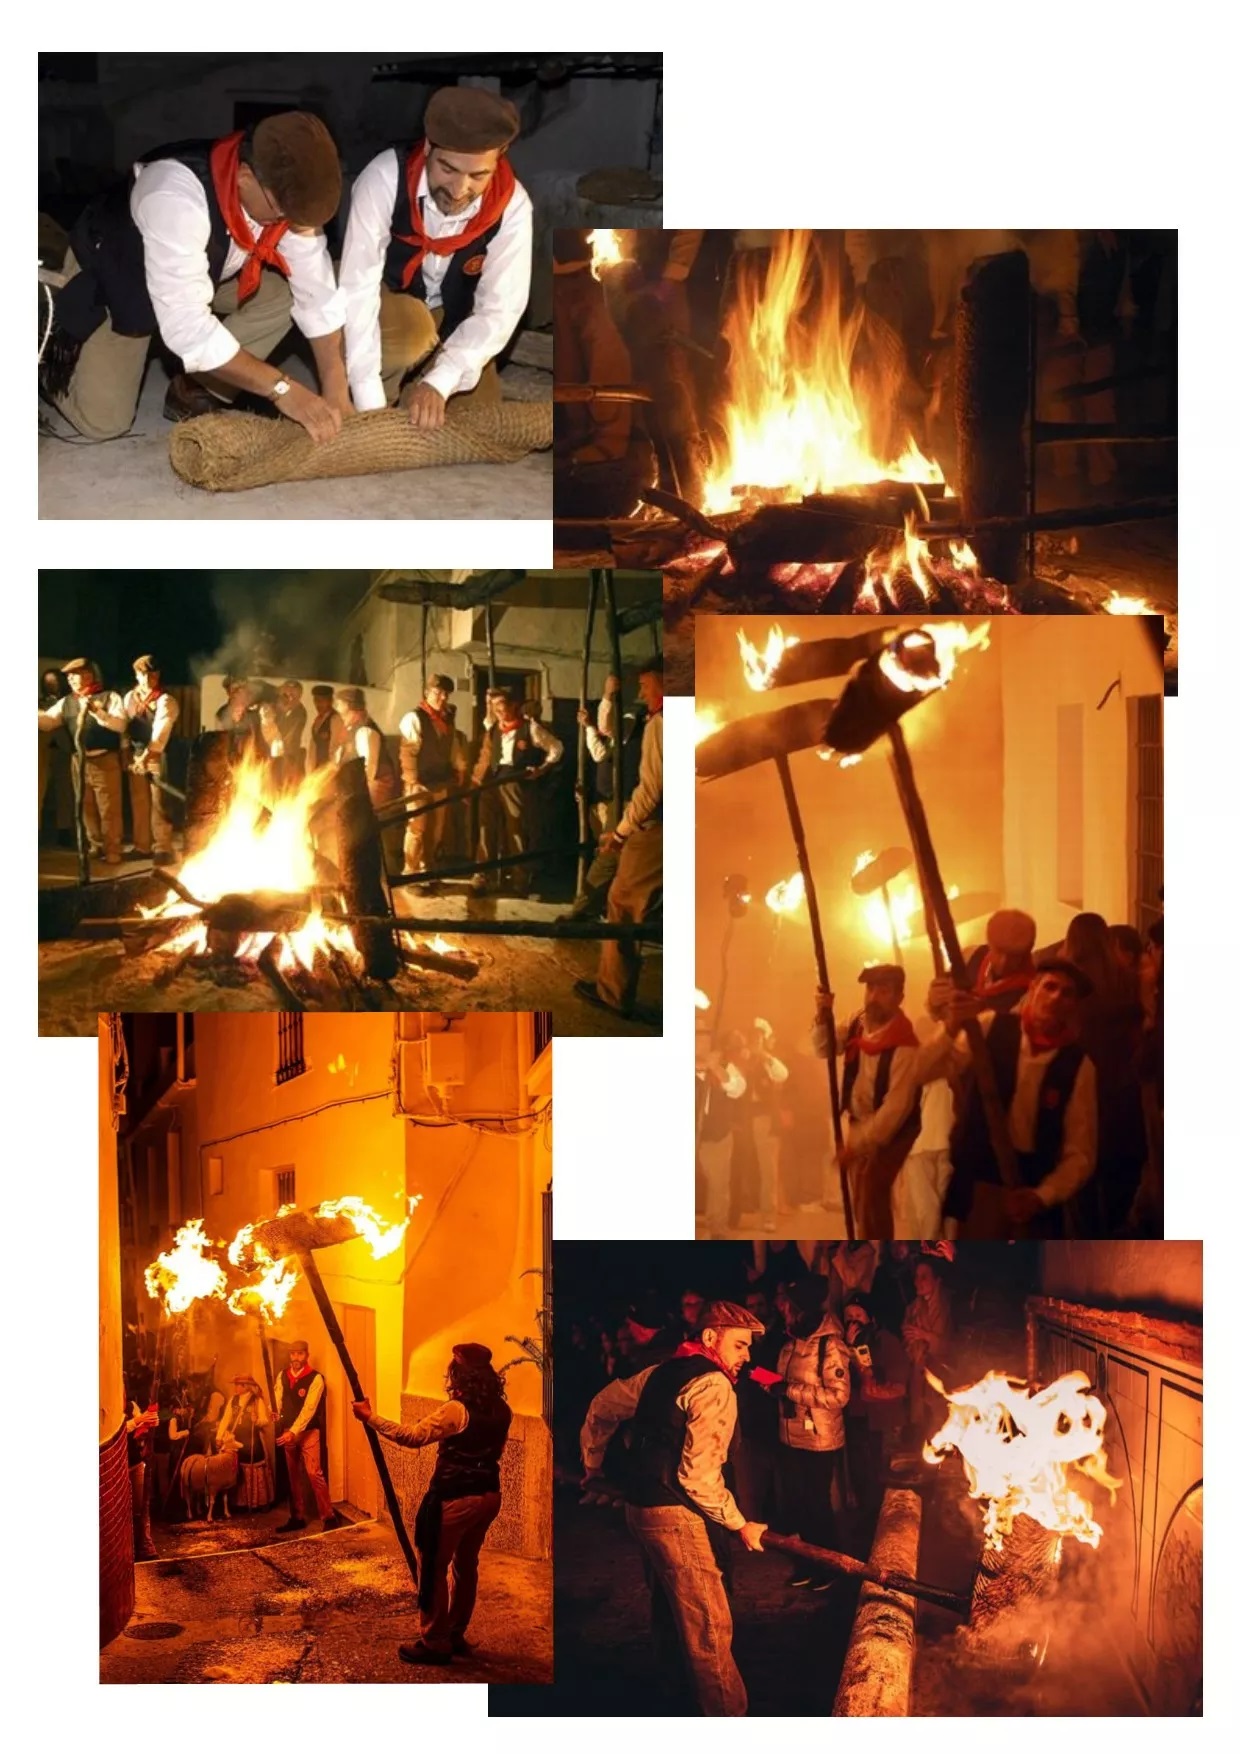 Fiesta de la Virgen de los Rondeles: Een Vuurige Traditionele Viering